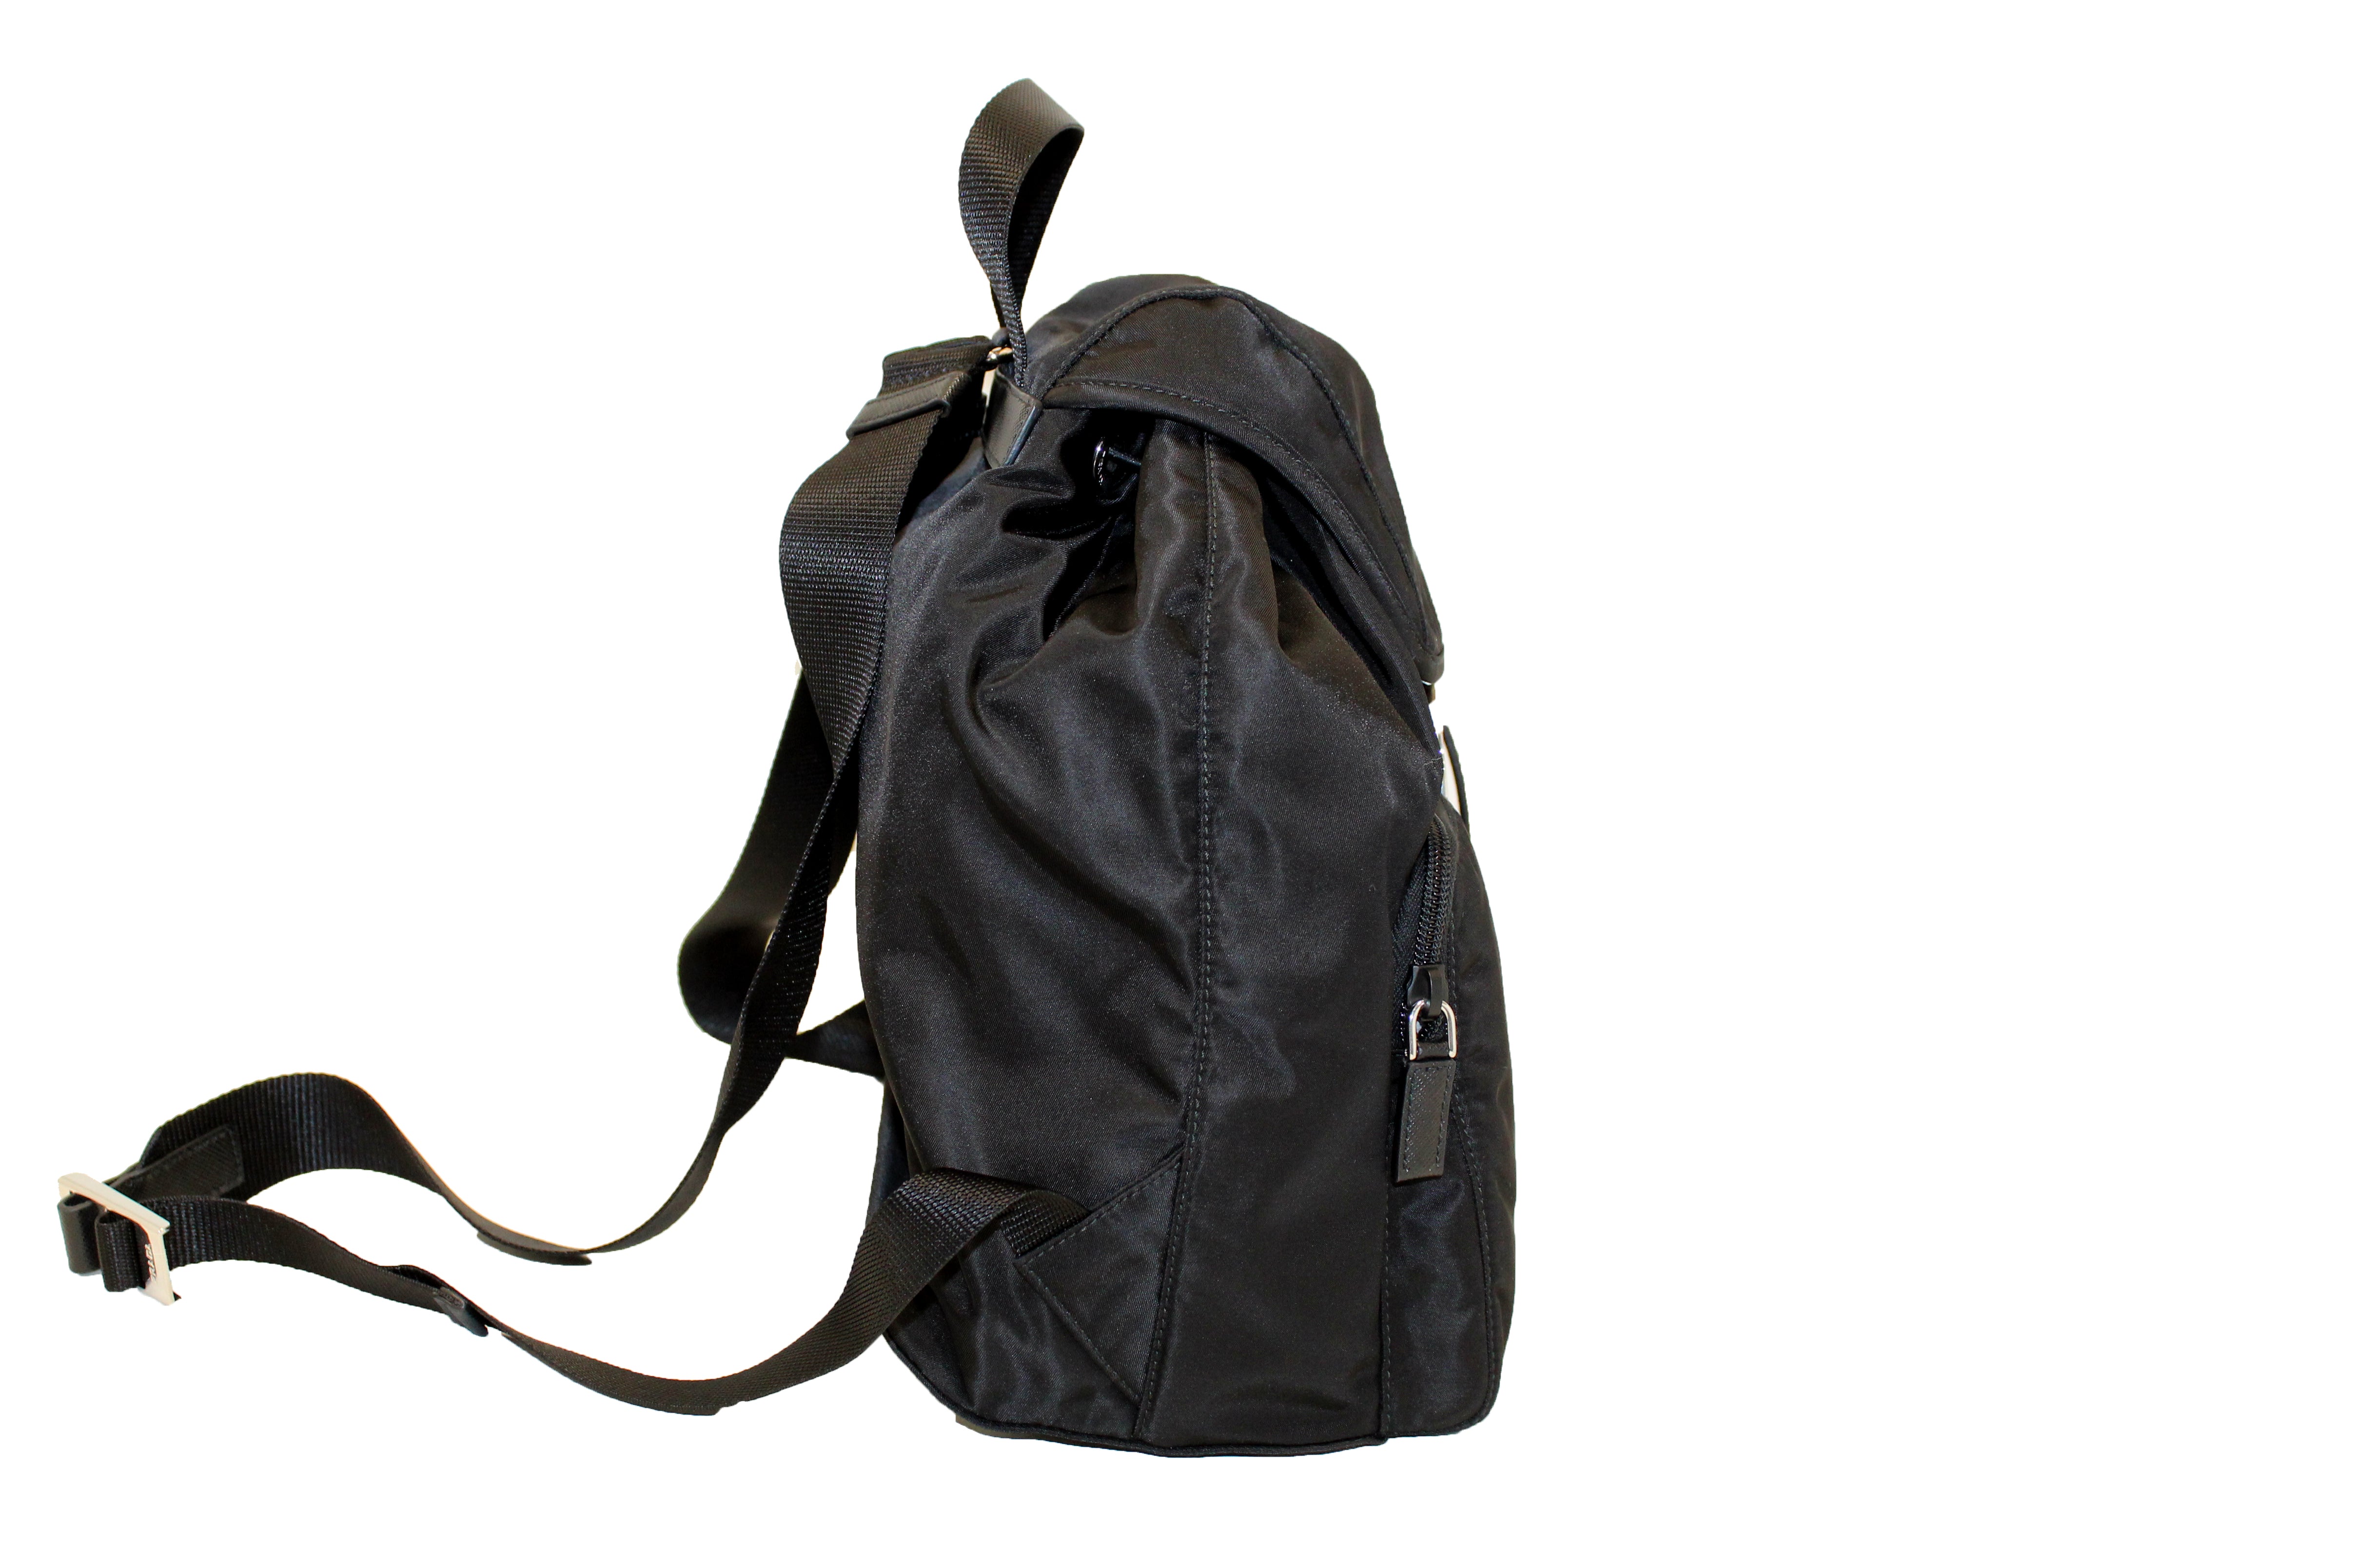 PRADA Vintage Nylon Backpack Black